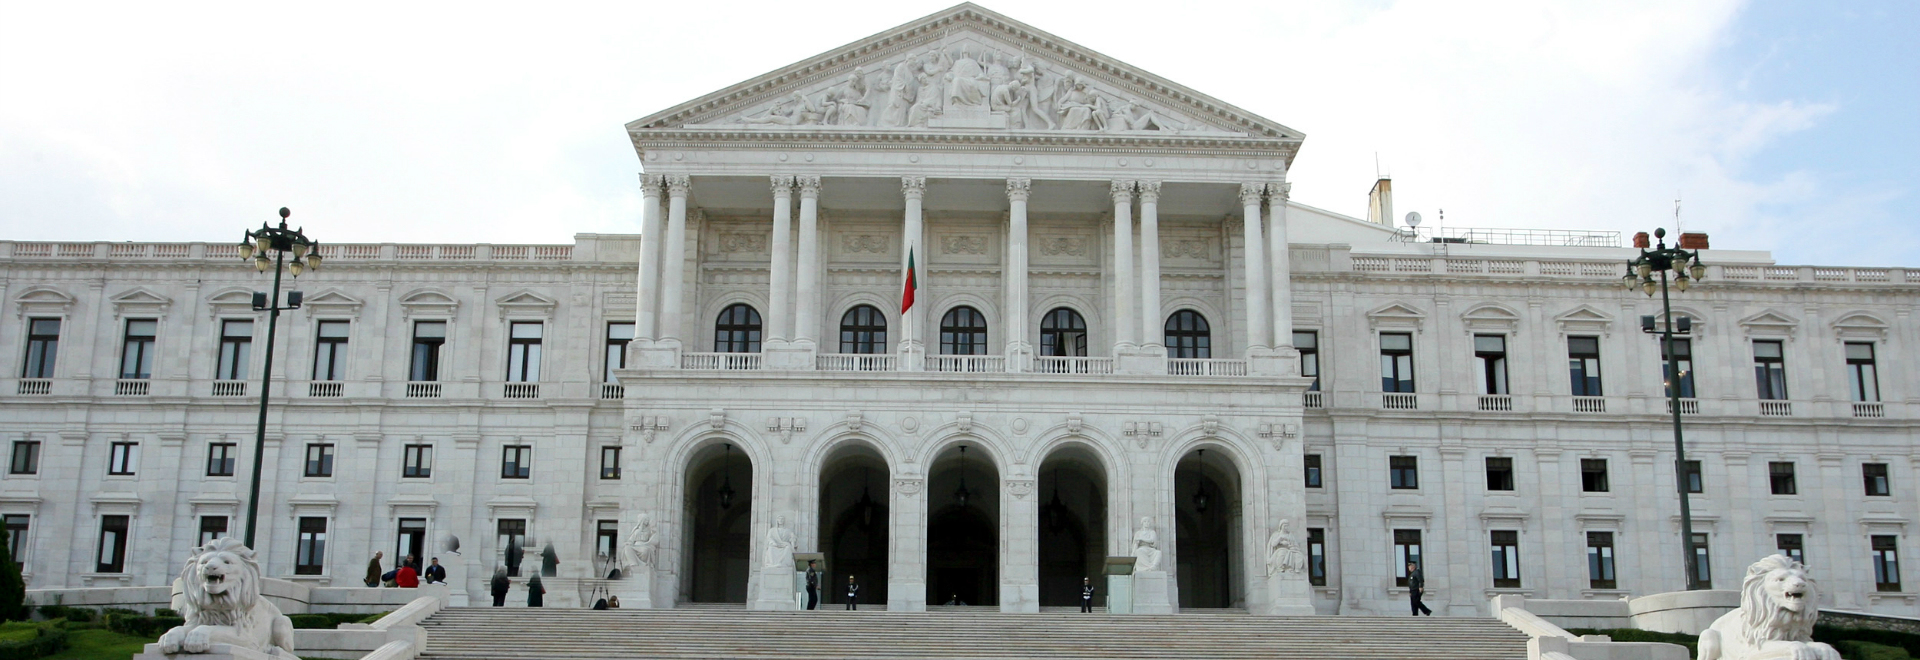 Palais SÃ£o Bento